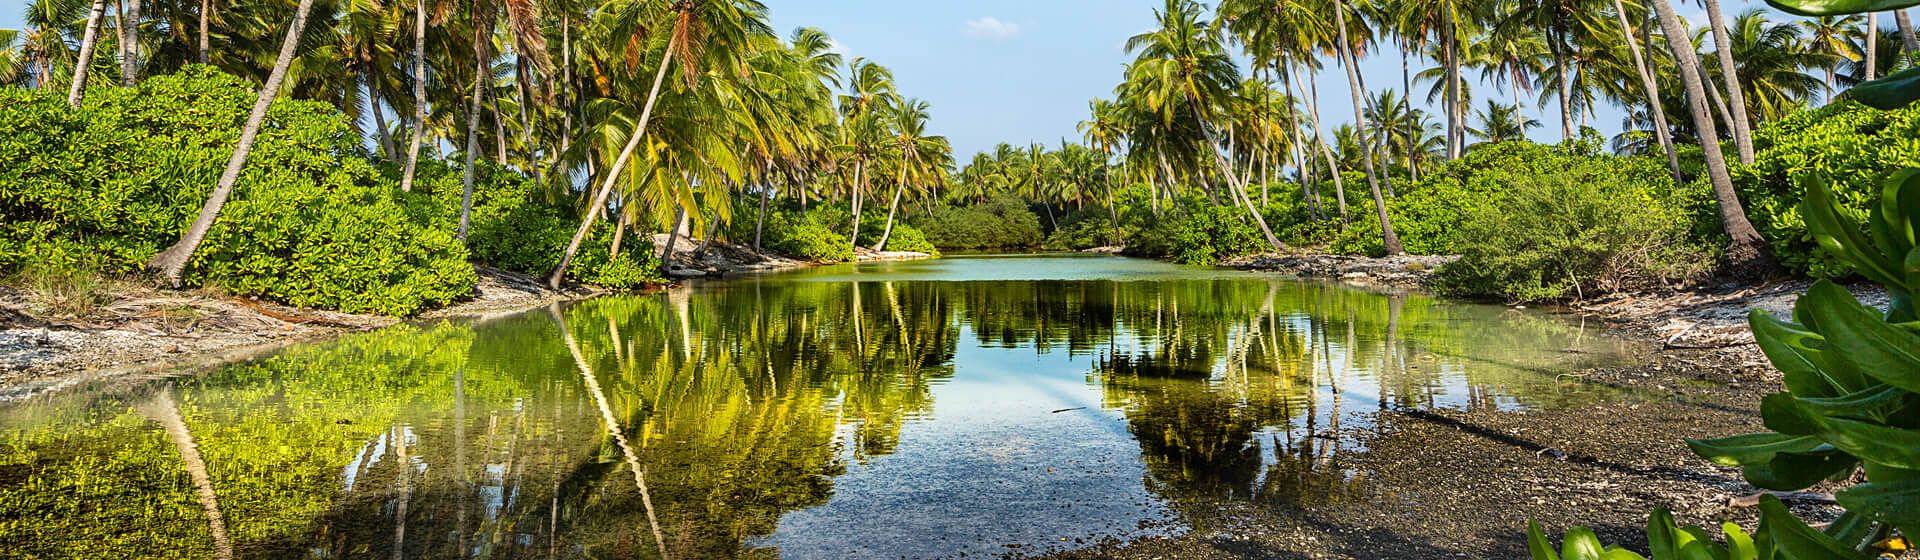 Holidays to Addu Atoll Image